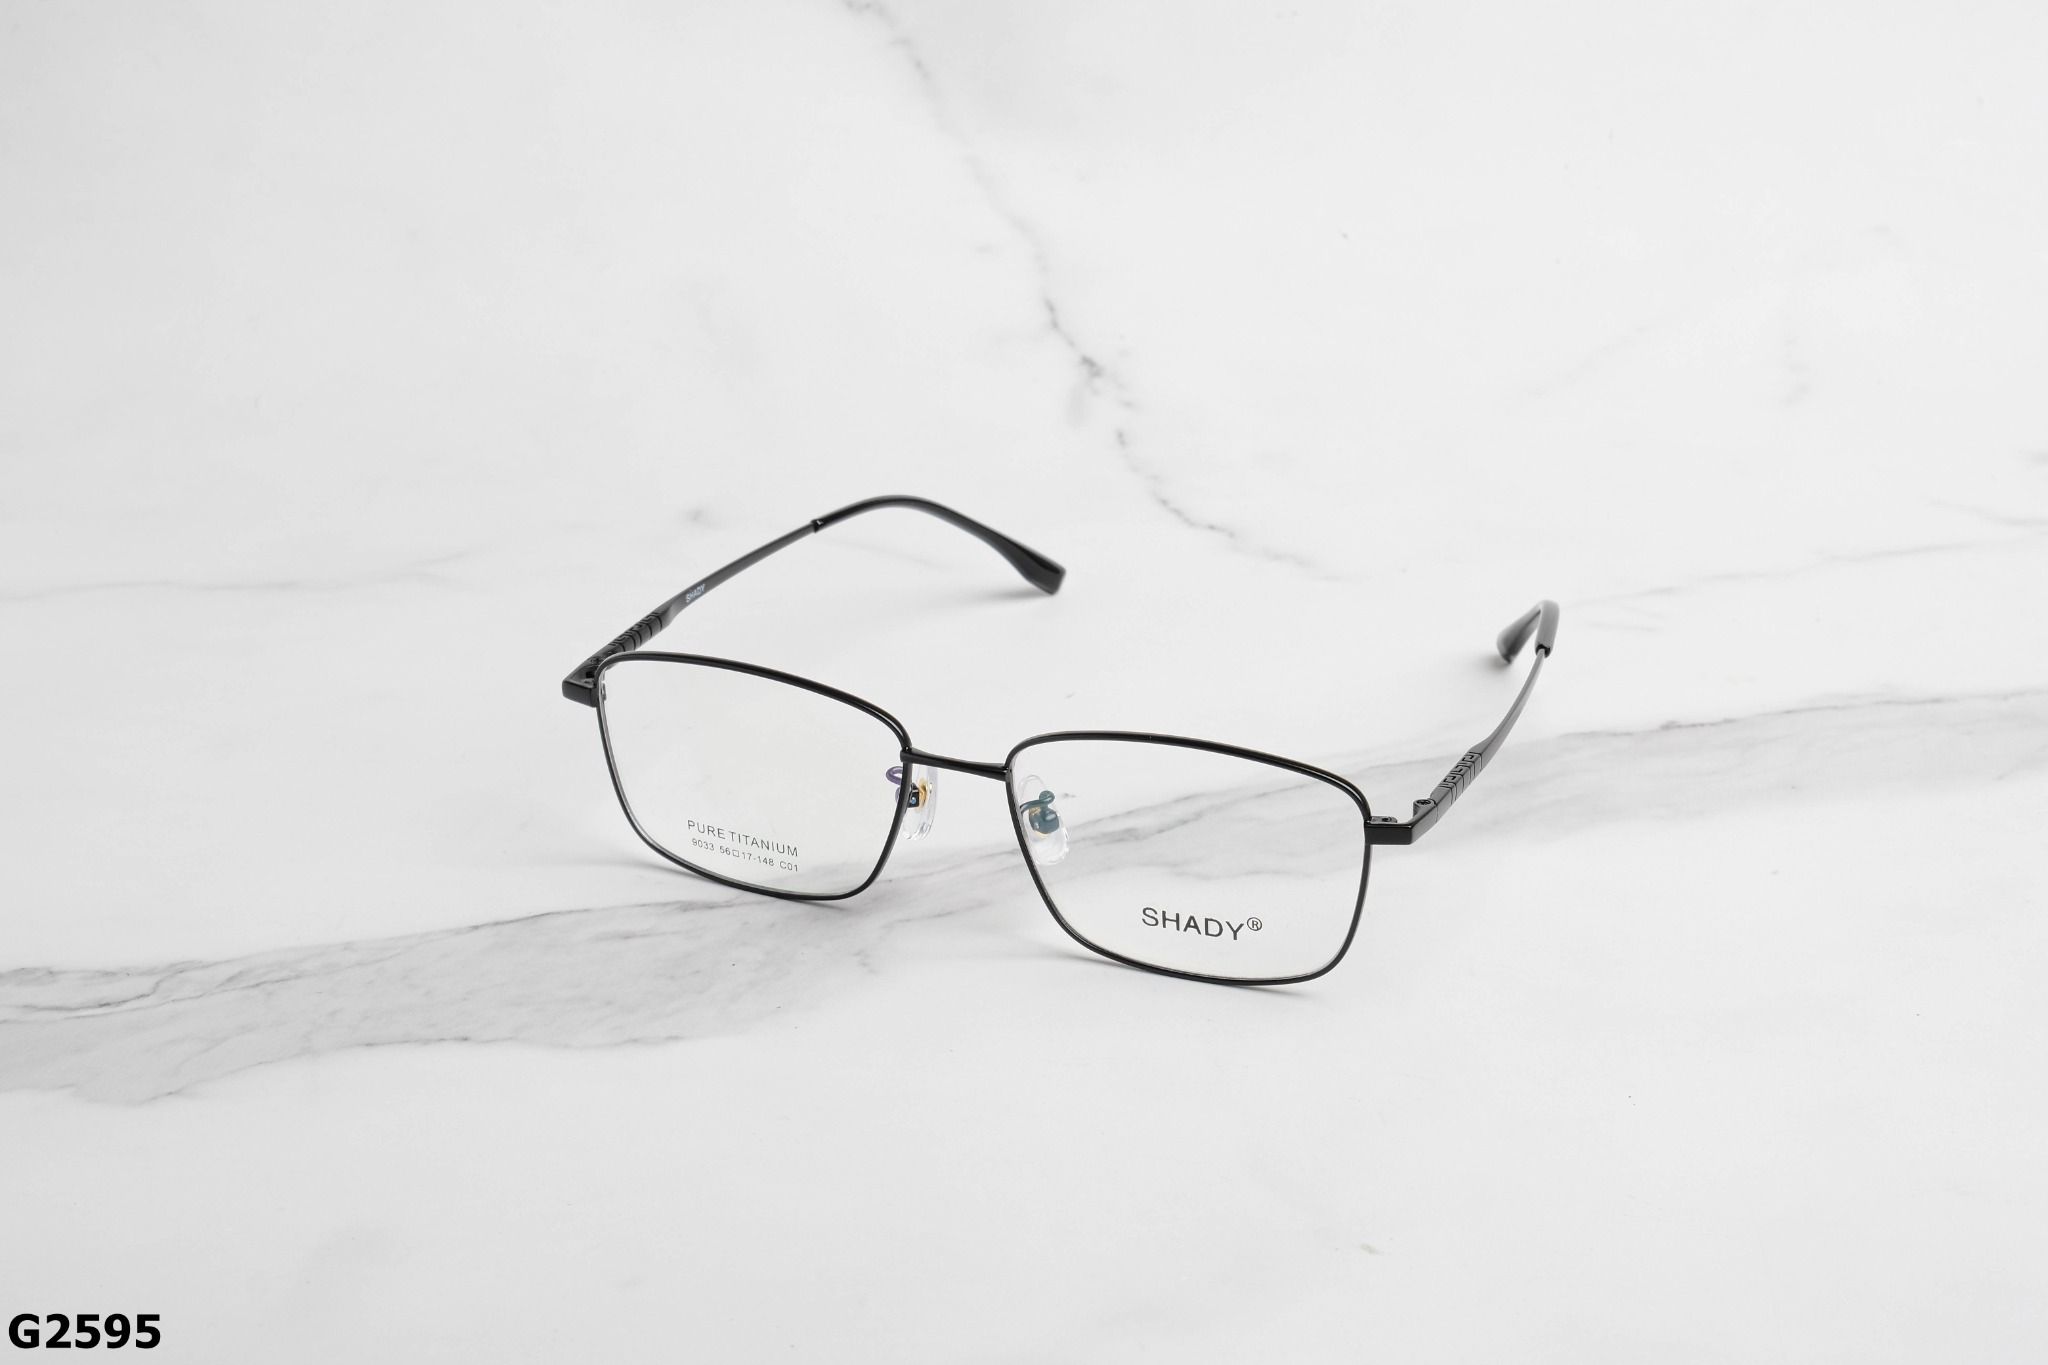  SHADY Eyewear - Glasses - G2595 